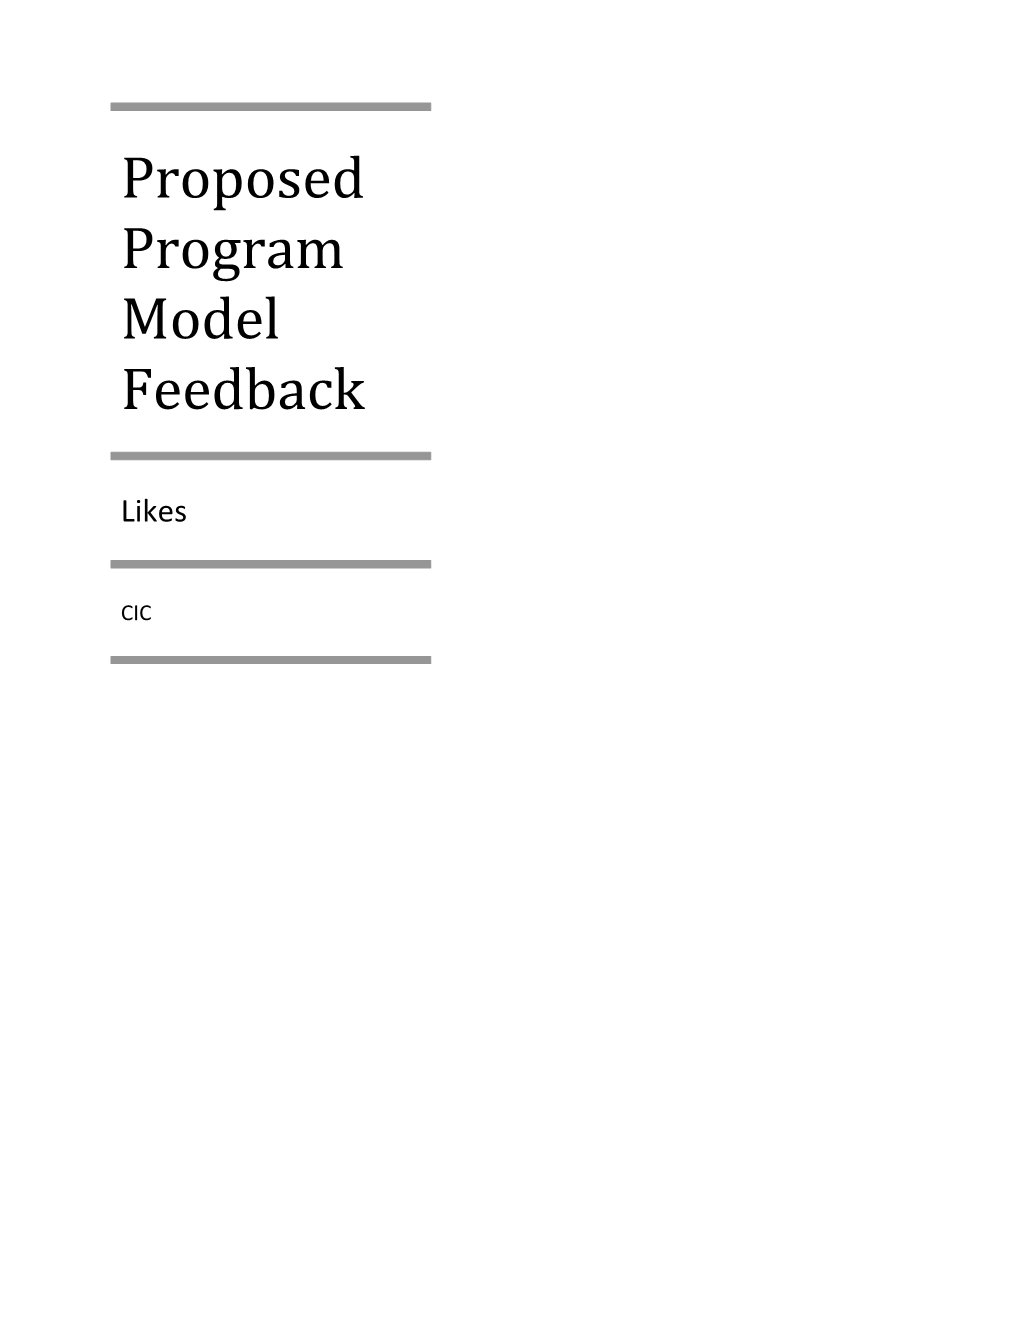 Proposed Program Model Feedback